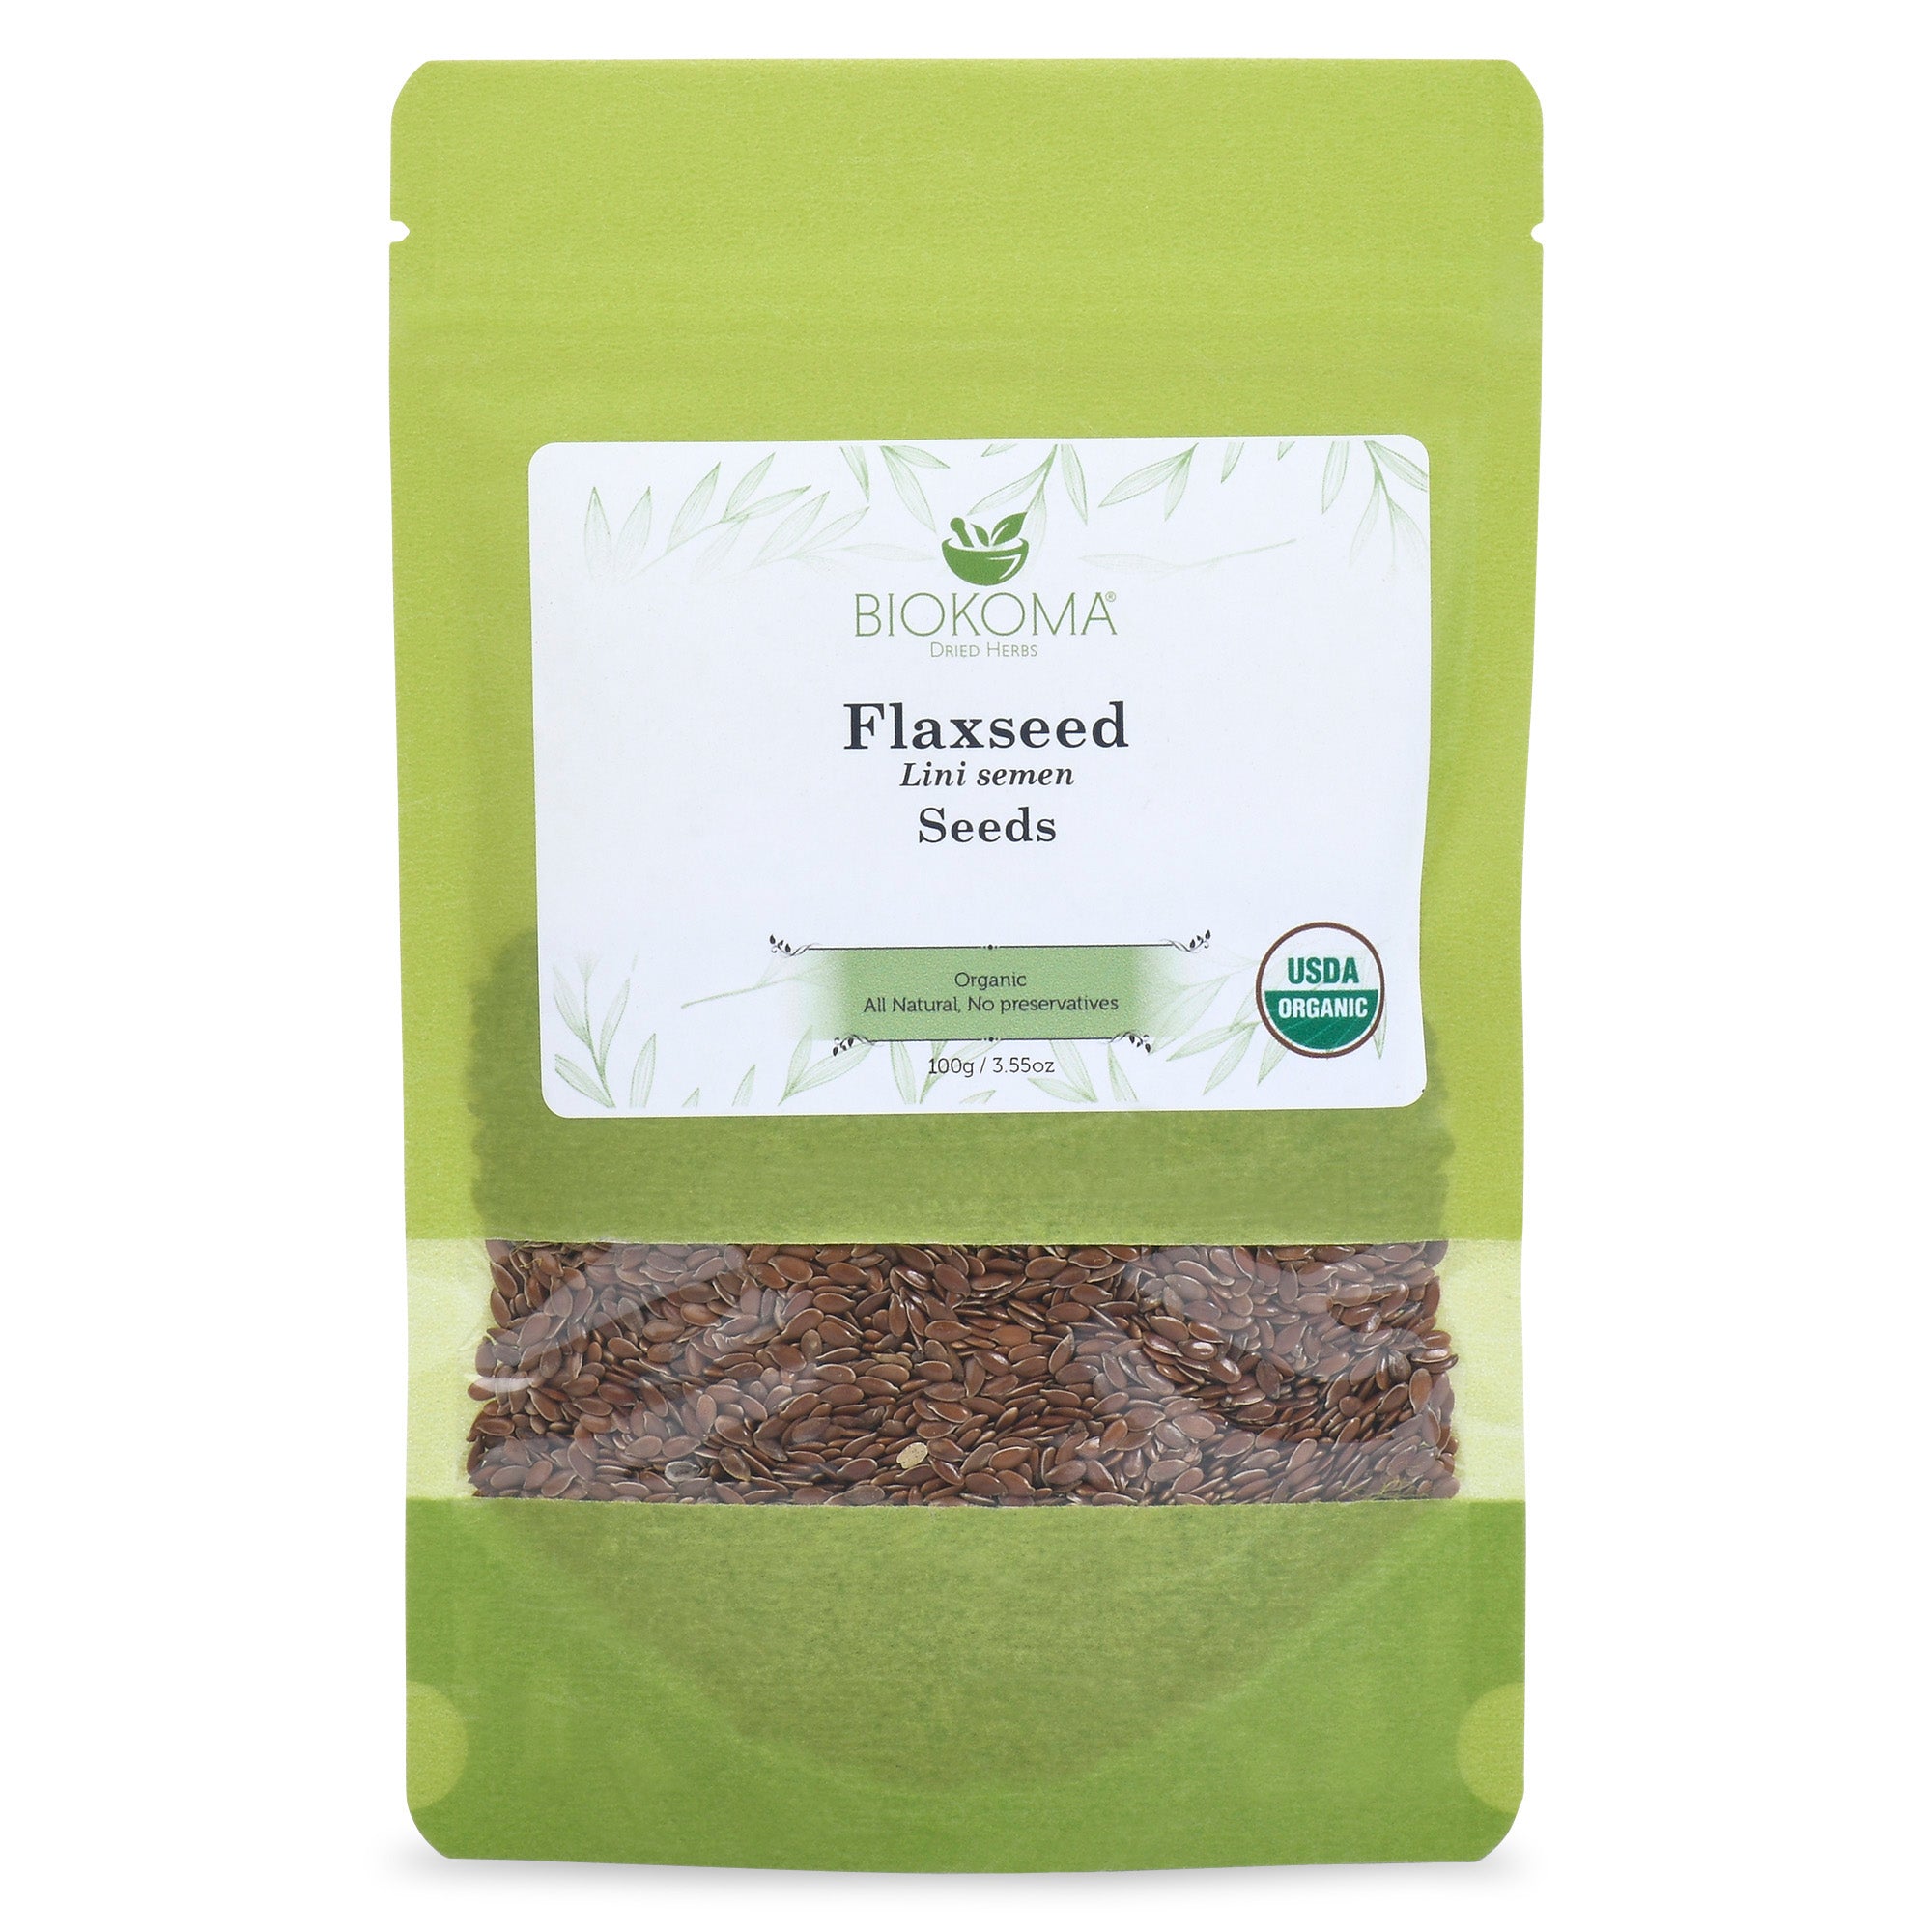 Flaxseed (Lini semen) Organic Seeds 100g  USDA Certified Organic